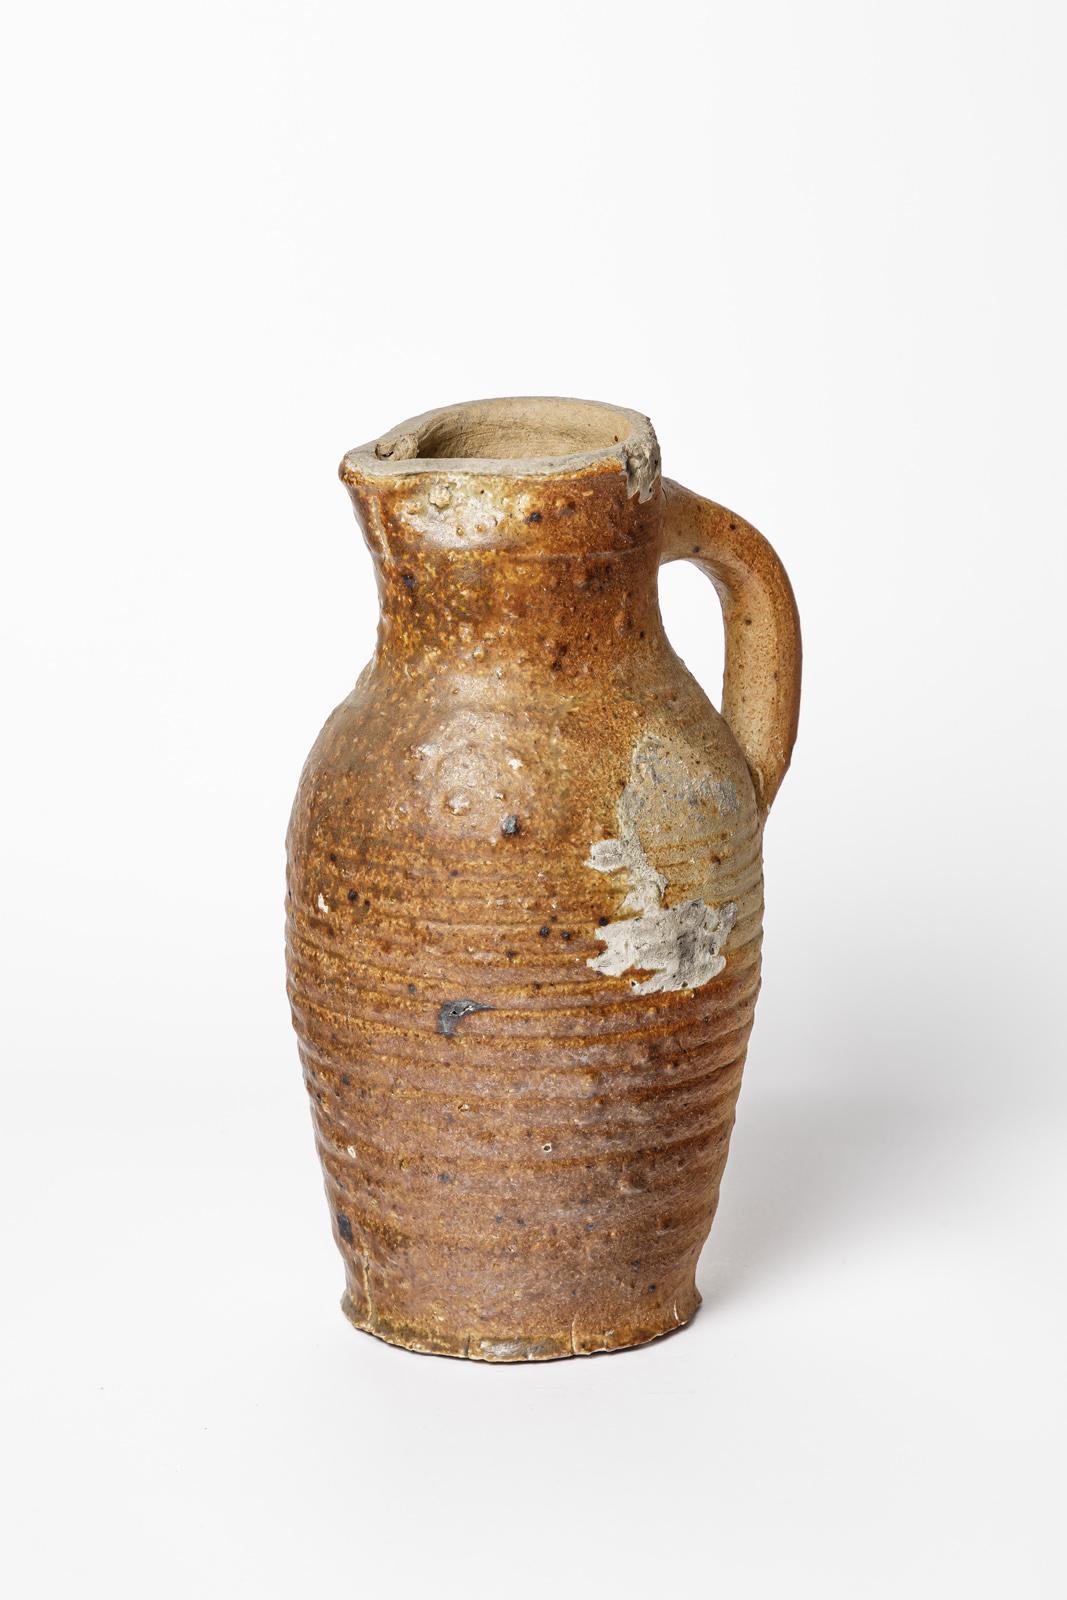 Martincamp - France

Antic 18th century stoneware ceramic pitcher

Original good condition - some original little cracks

Height 27 cm
Large 17 cm